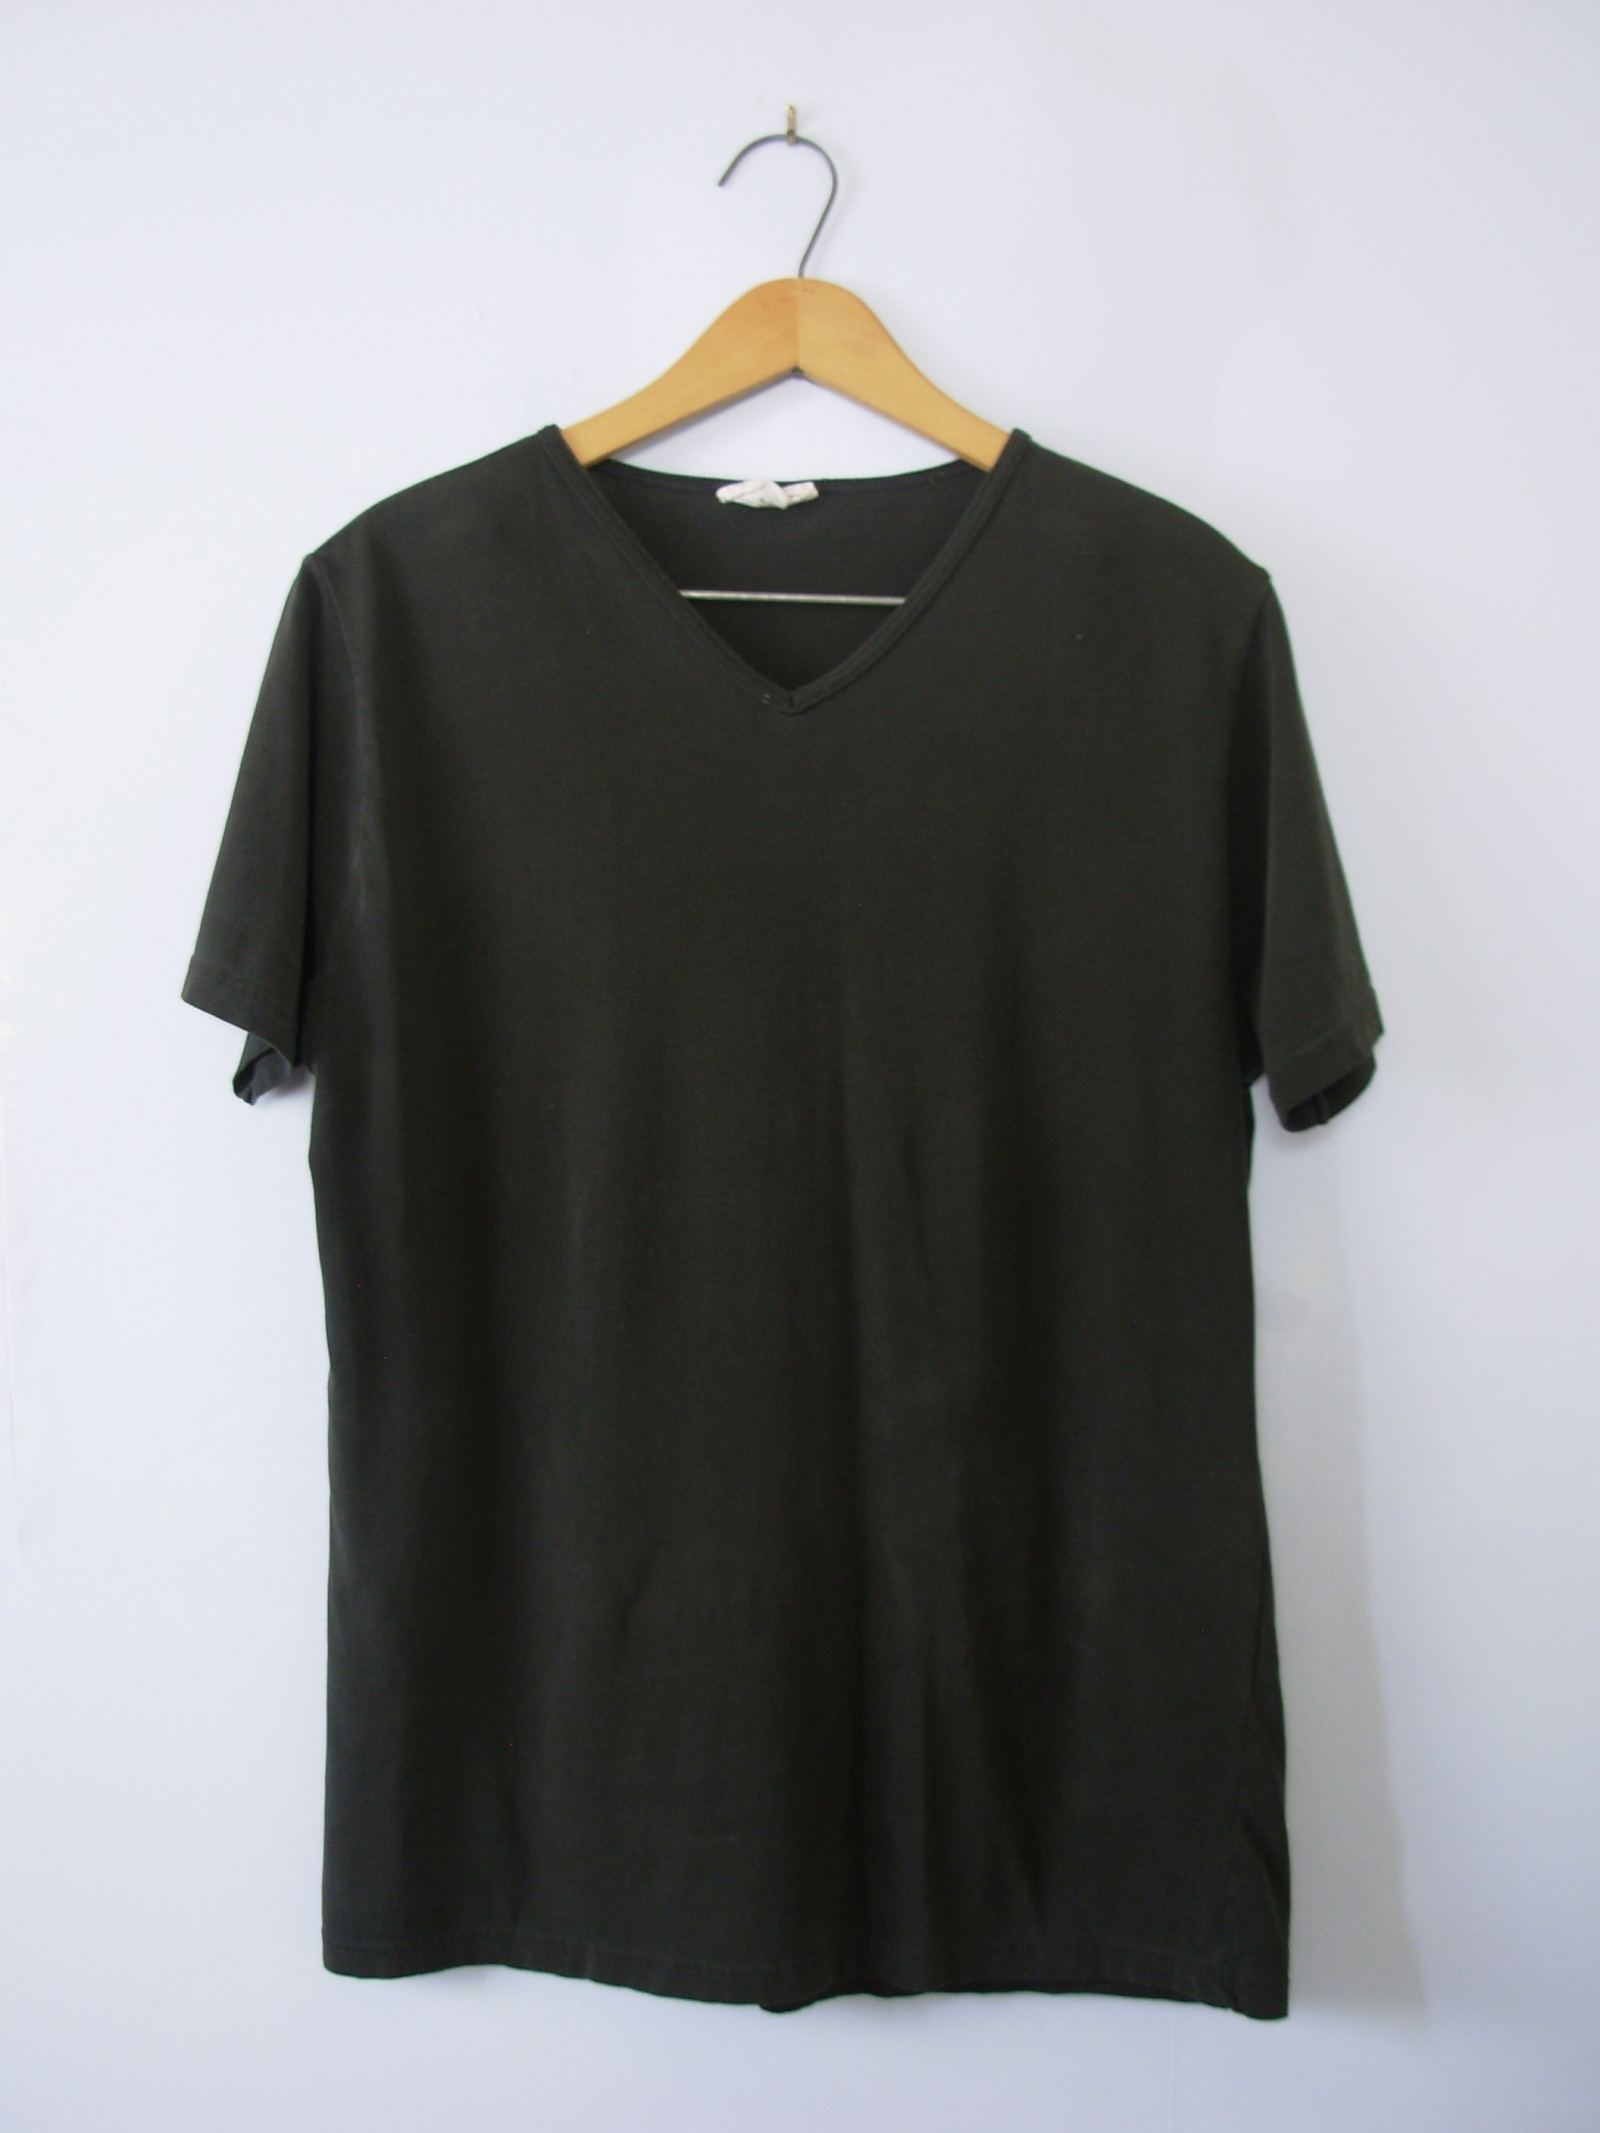 Vintage 90's distressed plain black tee shirt, women's size medium ...